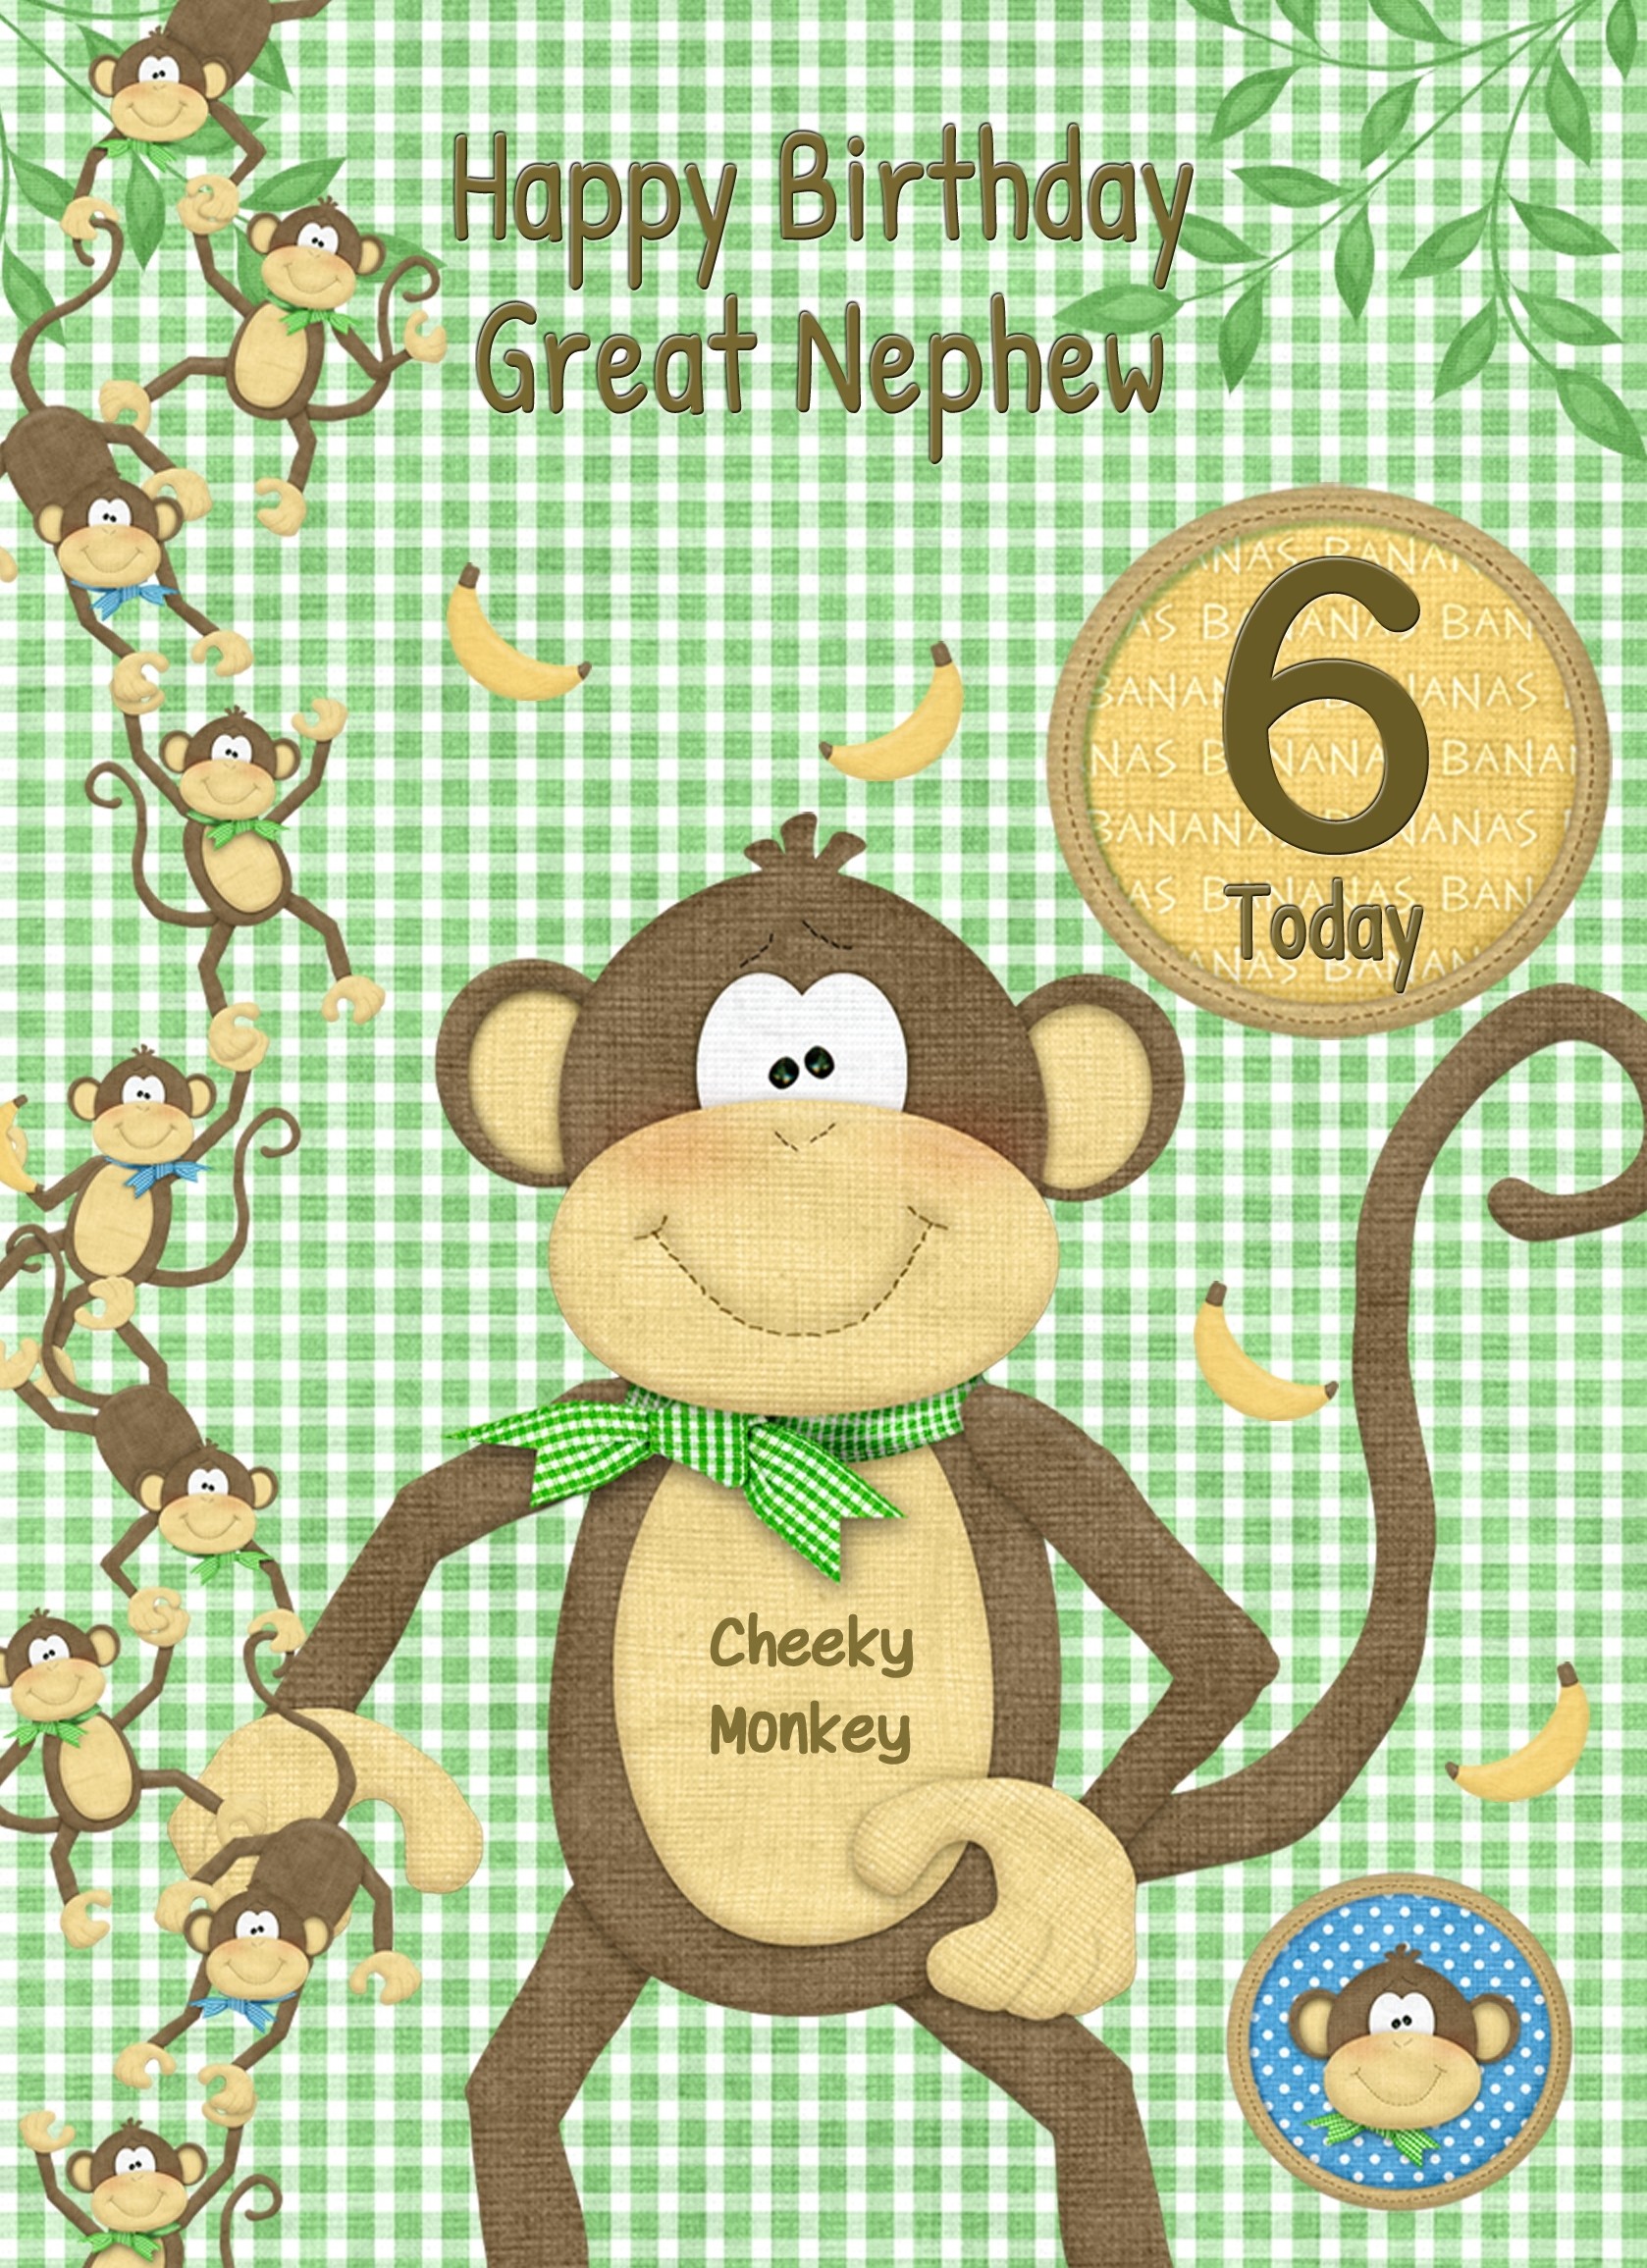 Kids 6th Birthday Cheeky Monkey Cartoon Card for Great Nephew